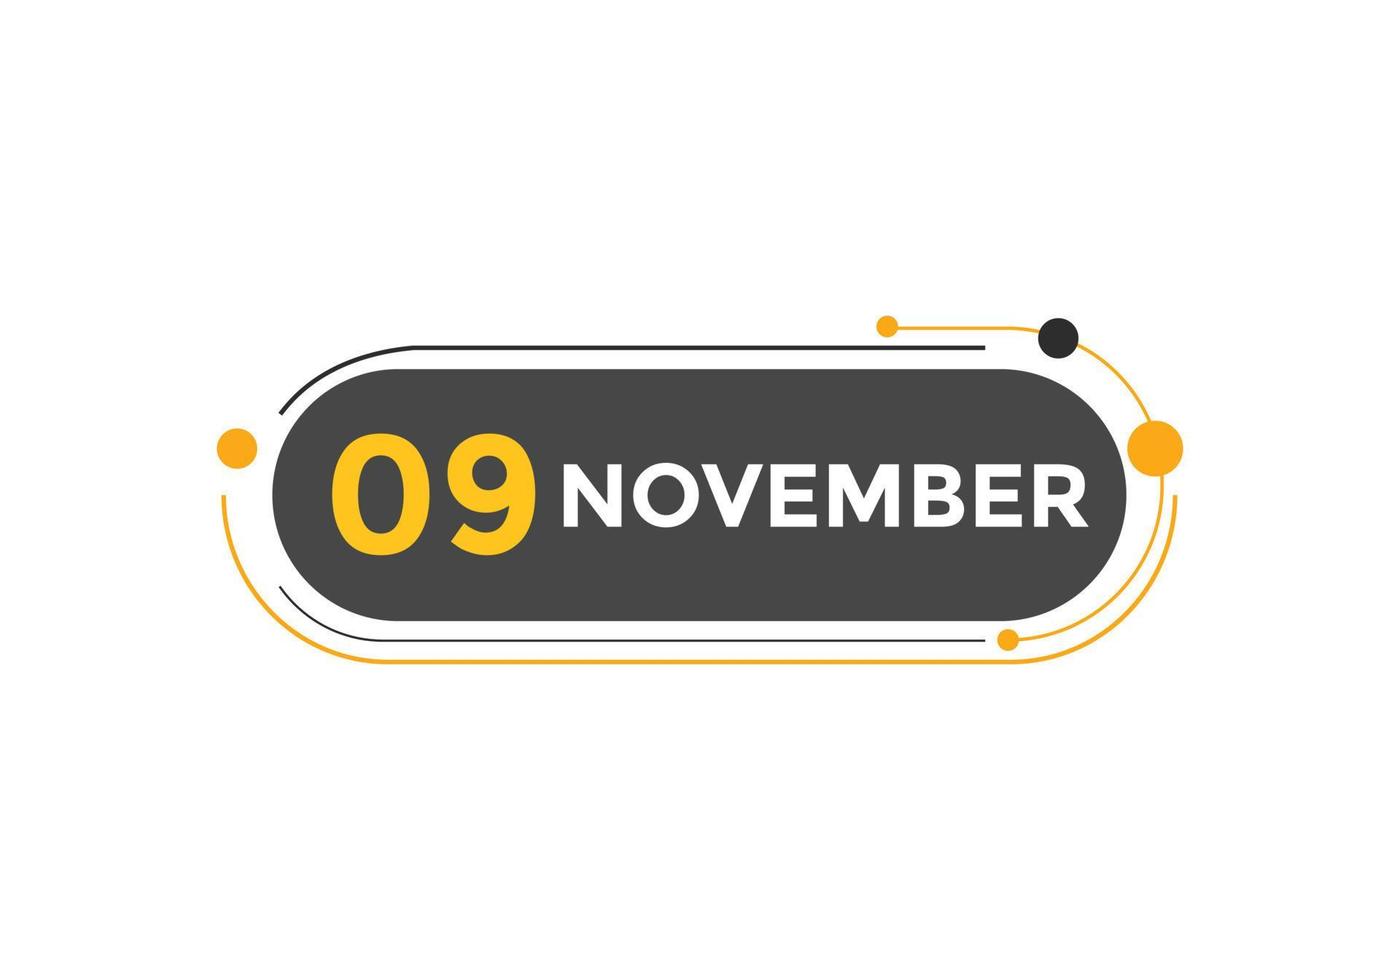 november 9 calendar reminder. 9th november daily calendar icon template. Calendar 9th november icon Design template. Vector illustration